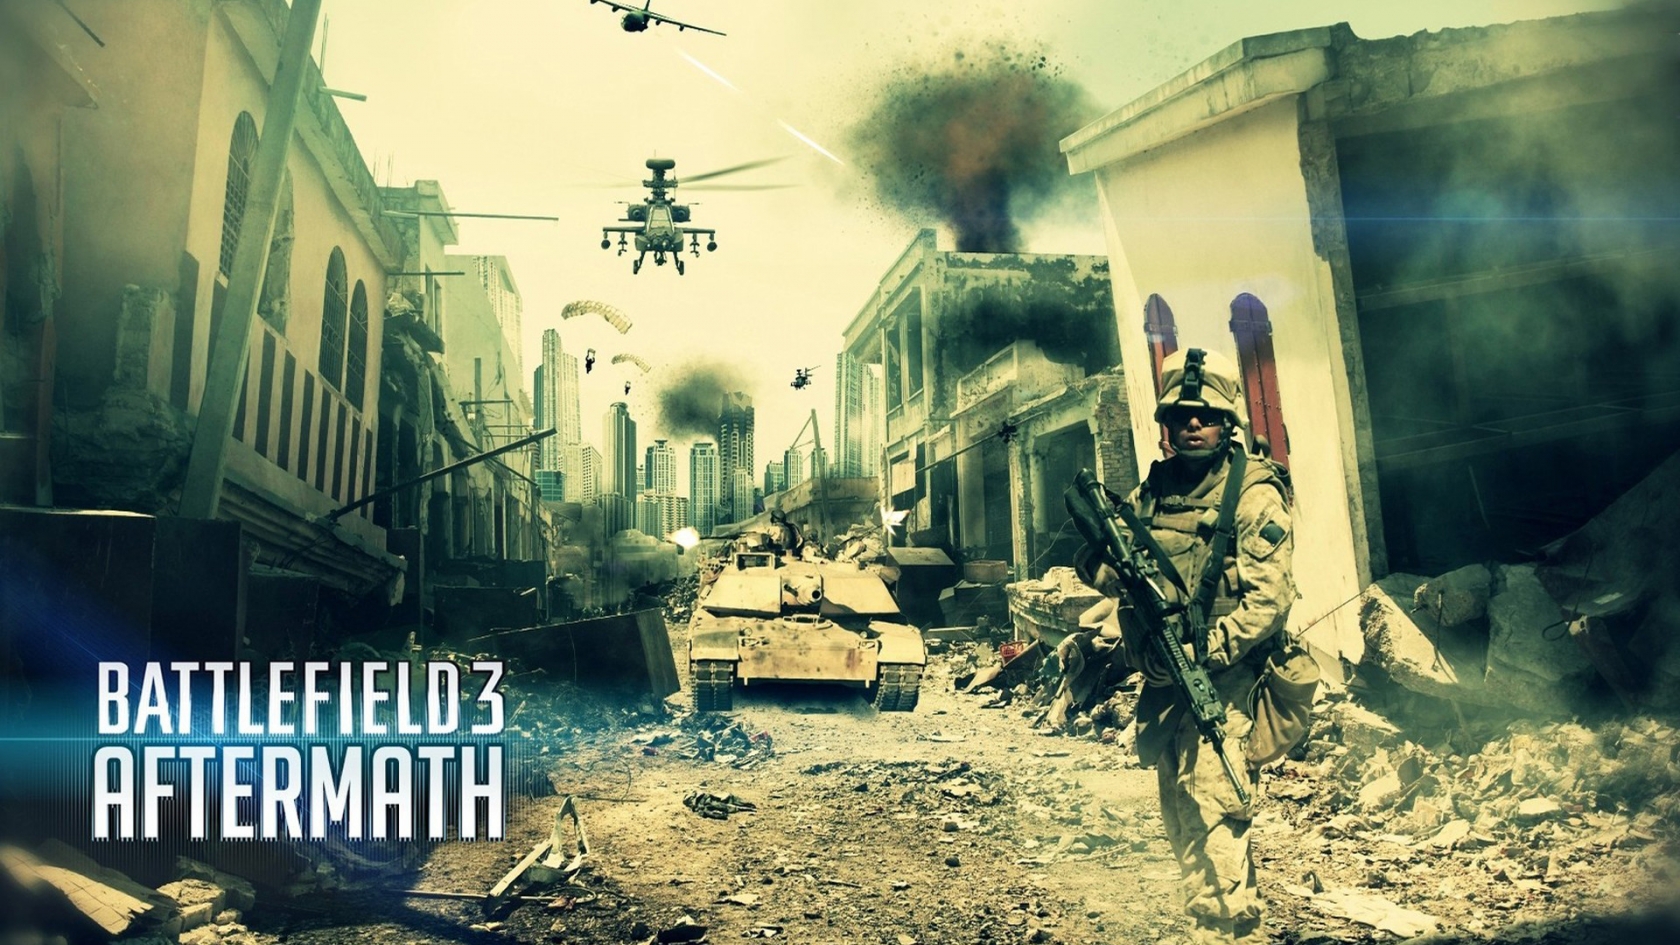 Battlefield 3 Aftermath for 1680 x 945 HDTV resolution